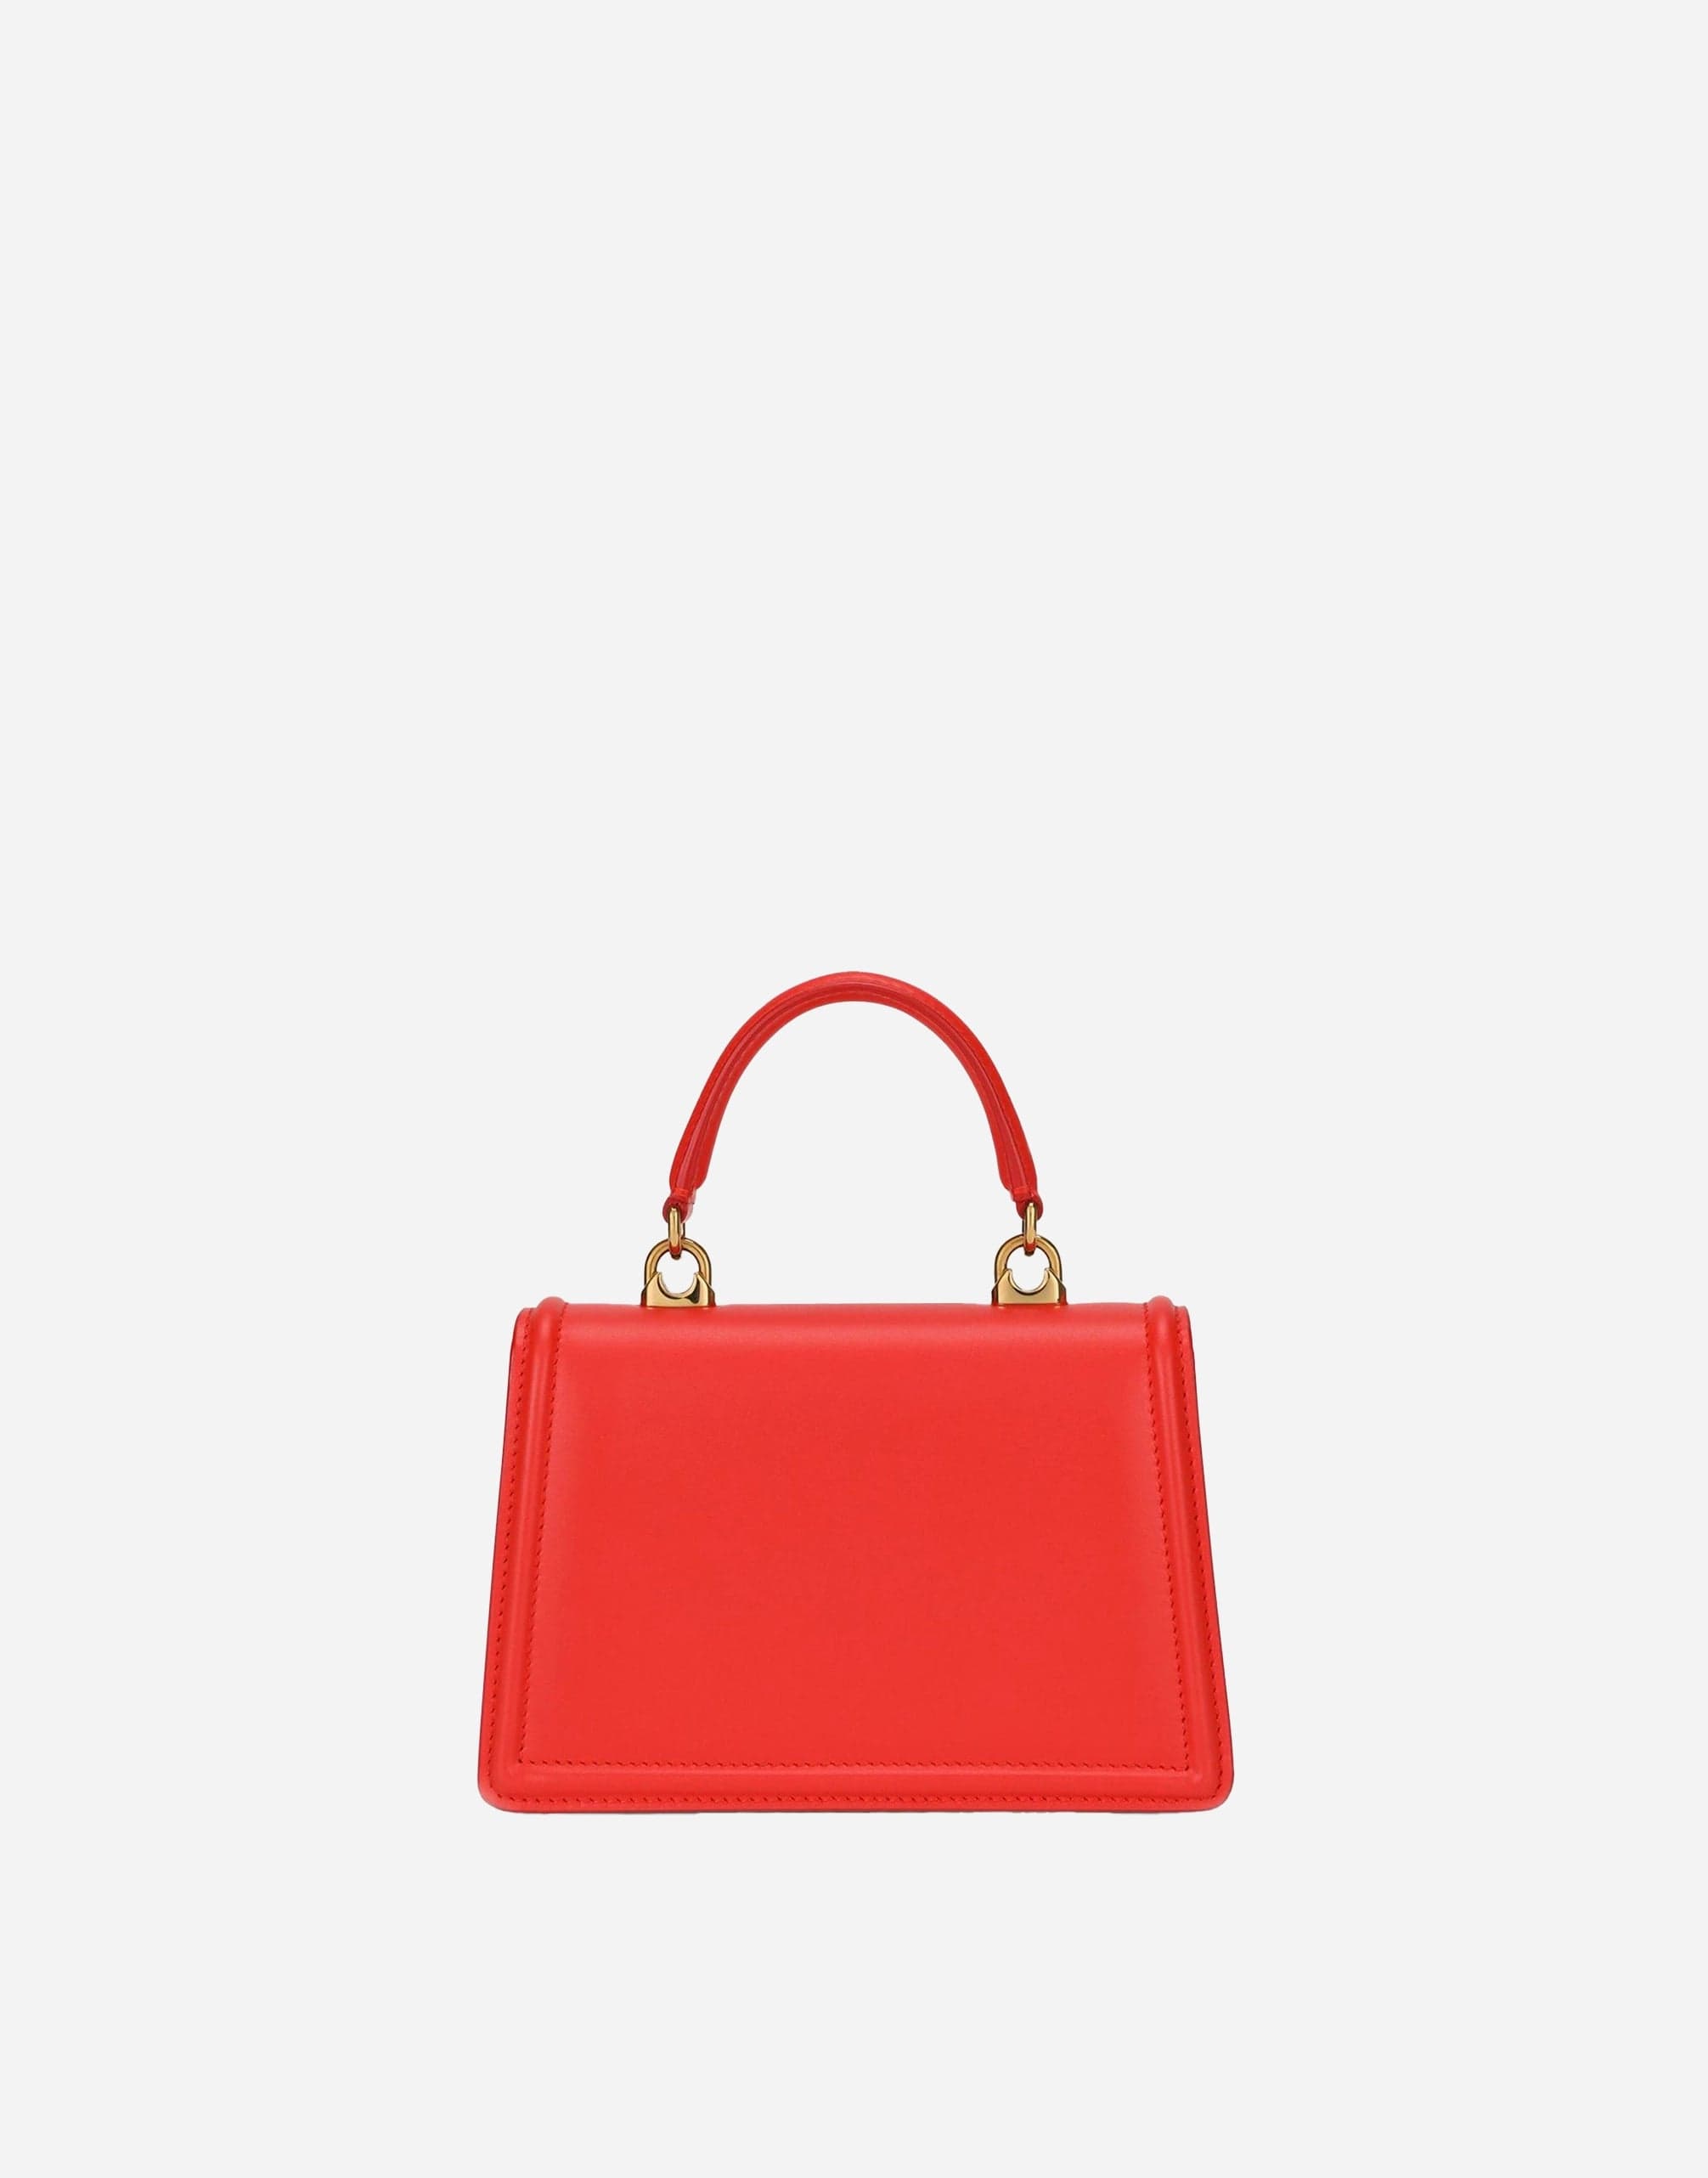 Dolce & Gabbana Top-Handle Small Devotion Bag